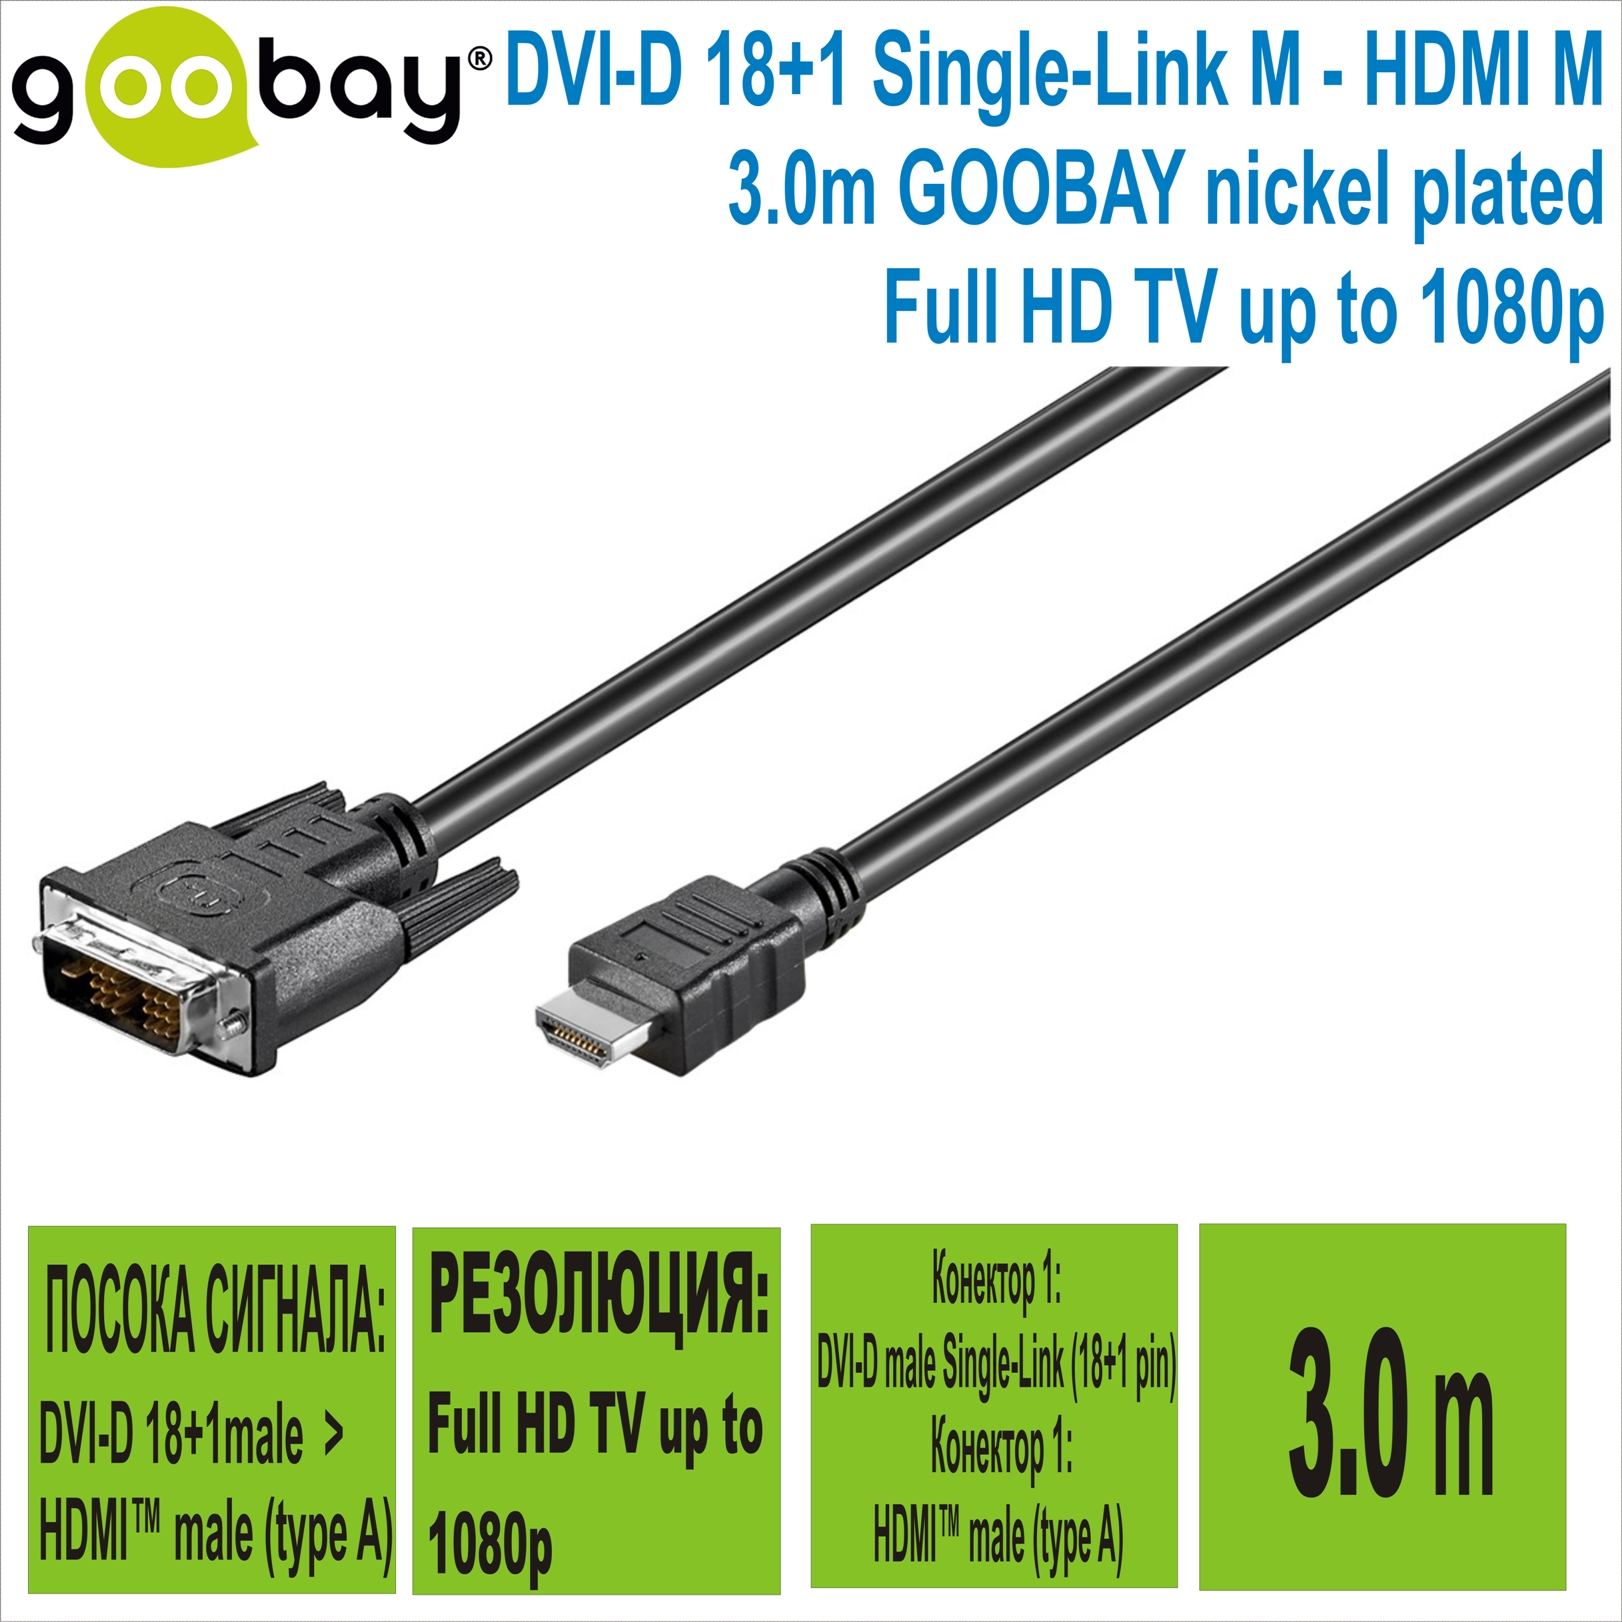 DVI-D male to HDMI M  3.0m nickel GOOBAY